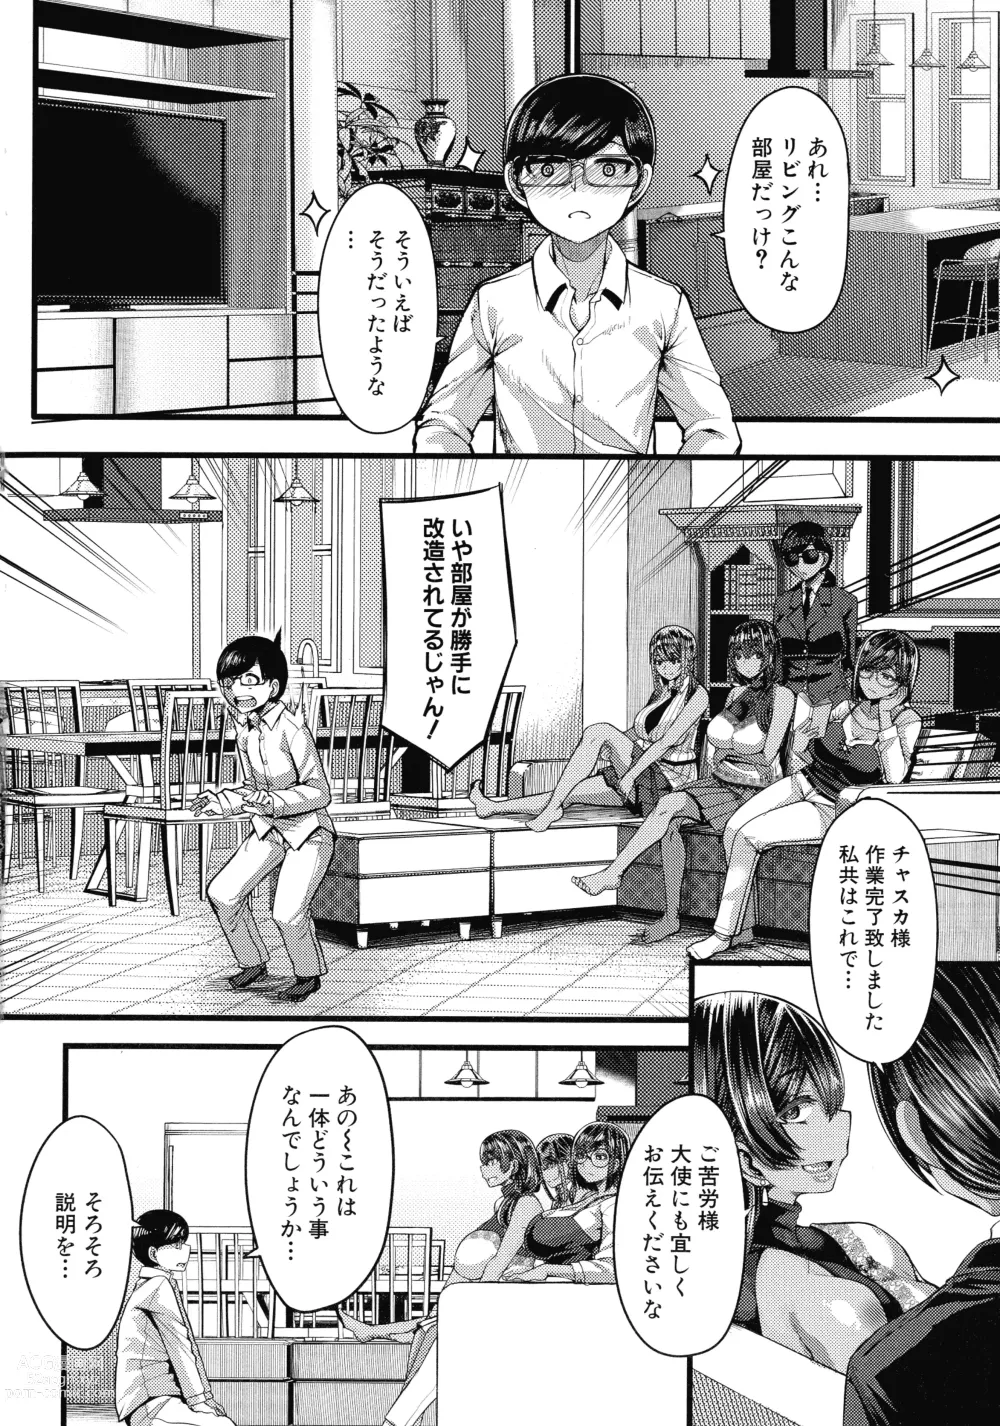 Page 7 of manga Kasshoku Hime to Himitsu no Keiyaku